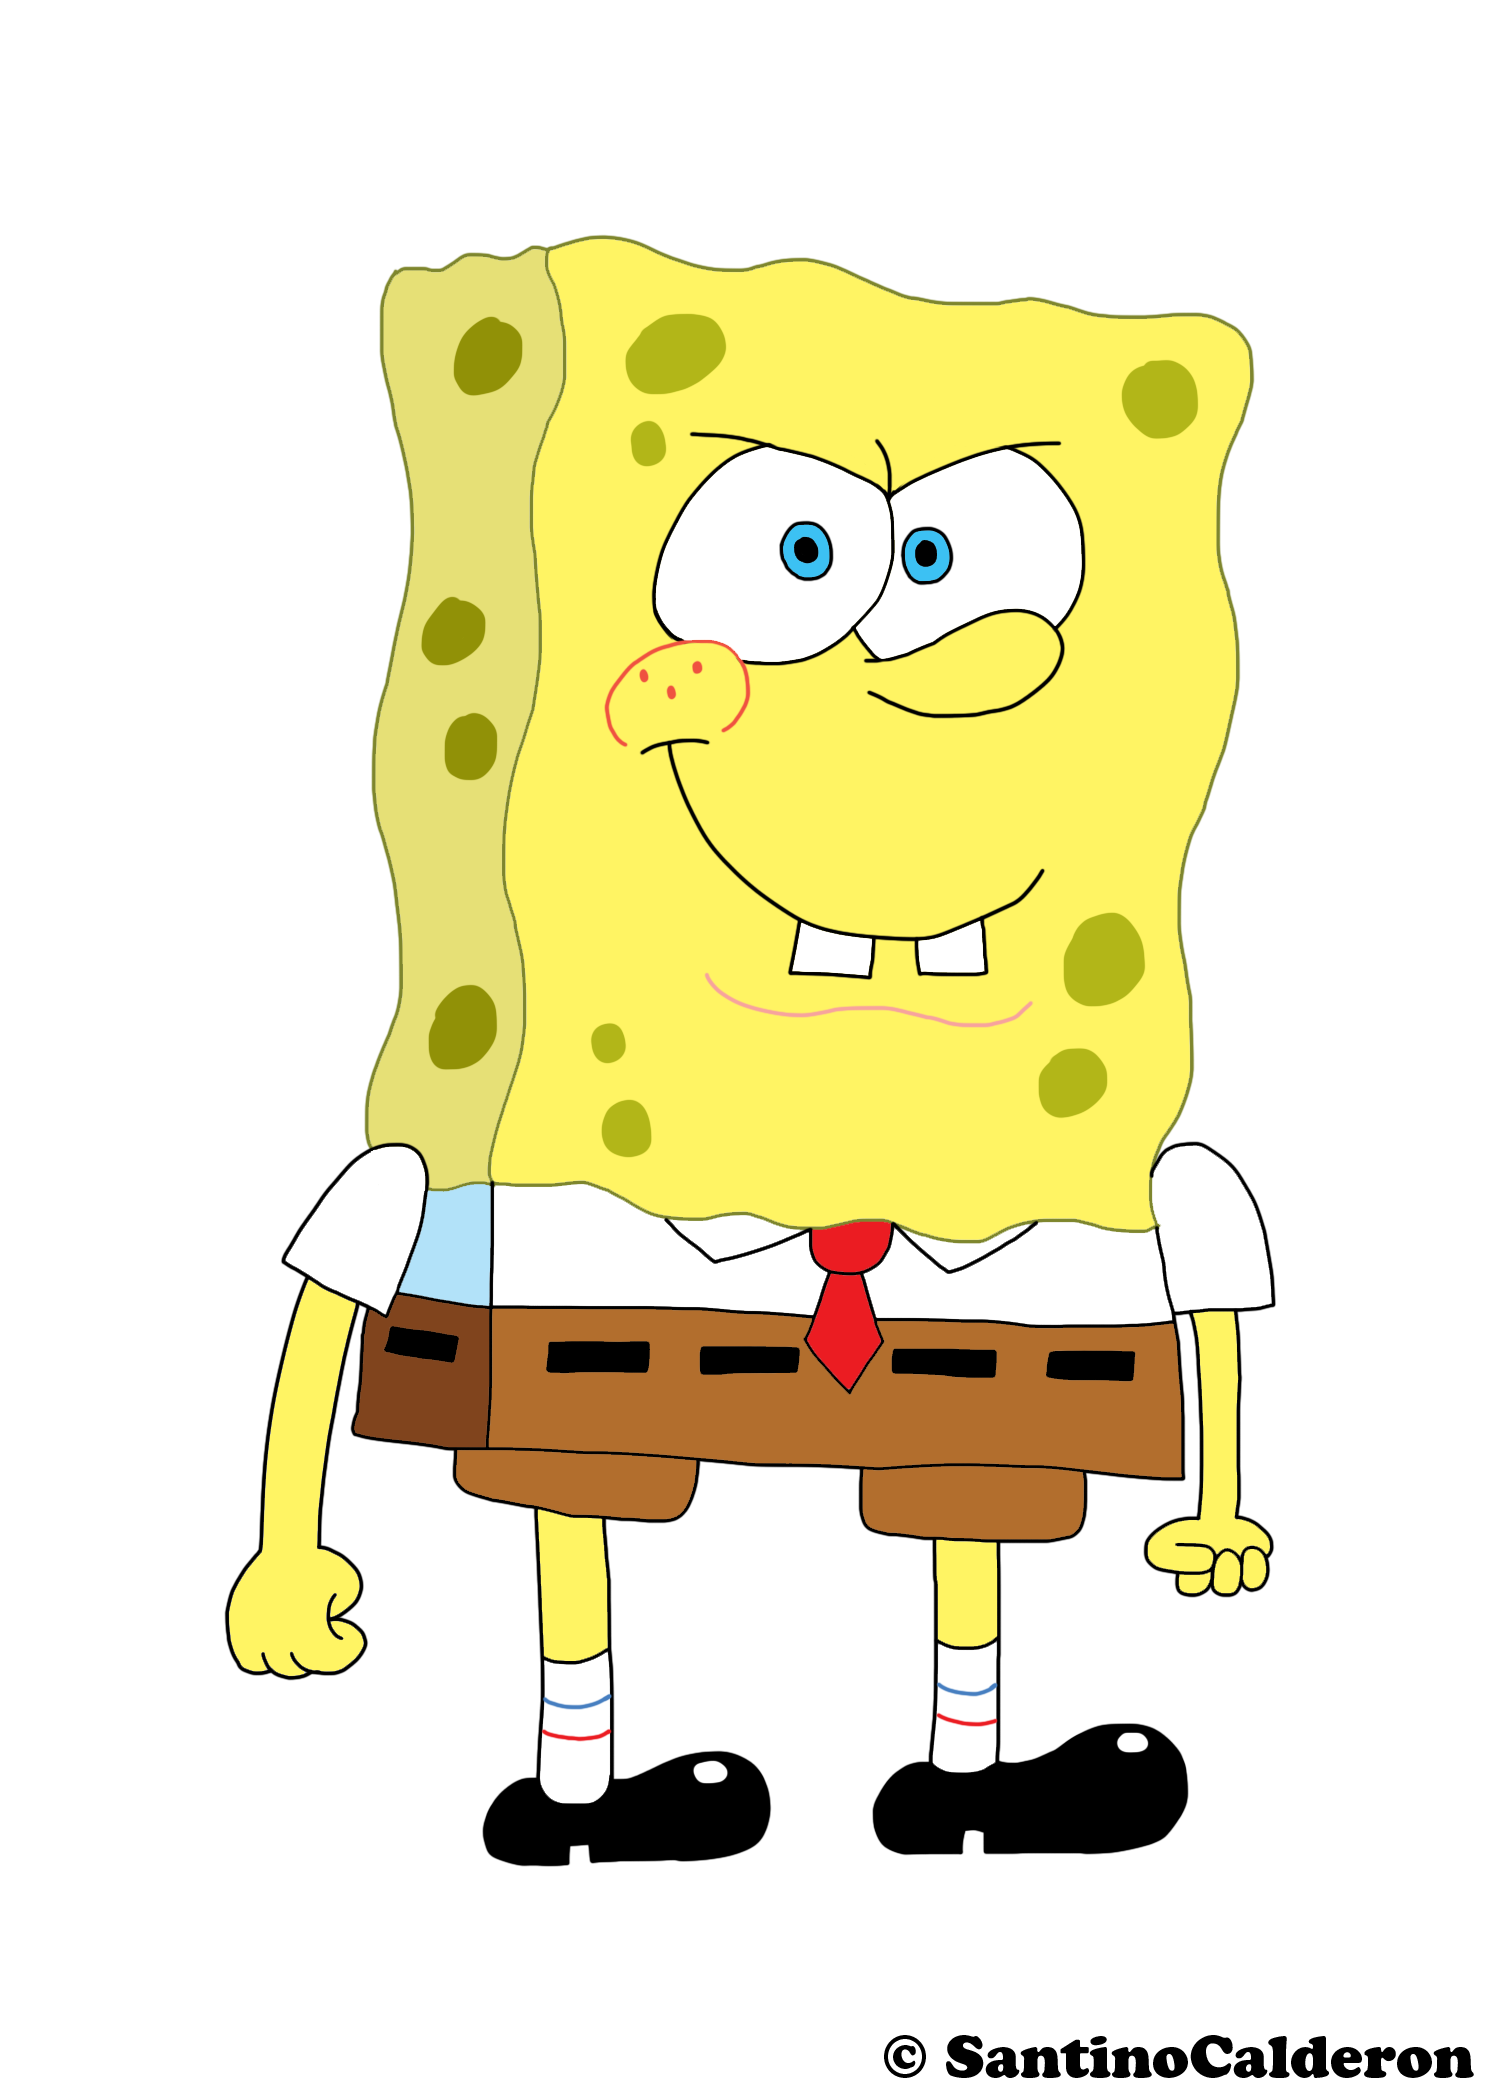 SpongeBob SquarePants 2 by KegsToon03 on DeviantArt